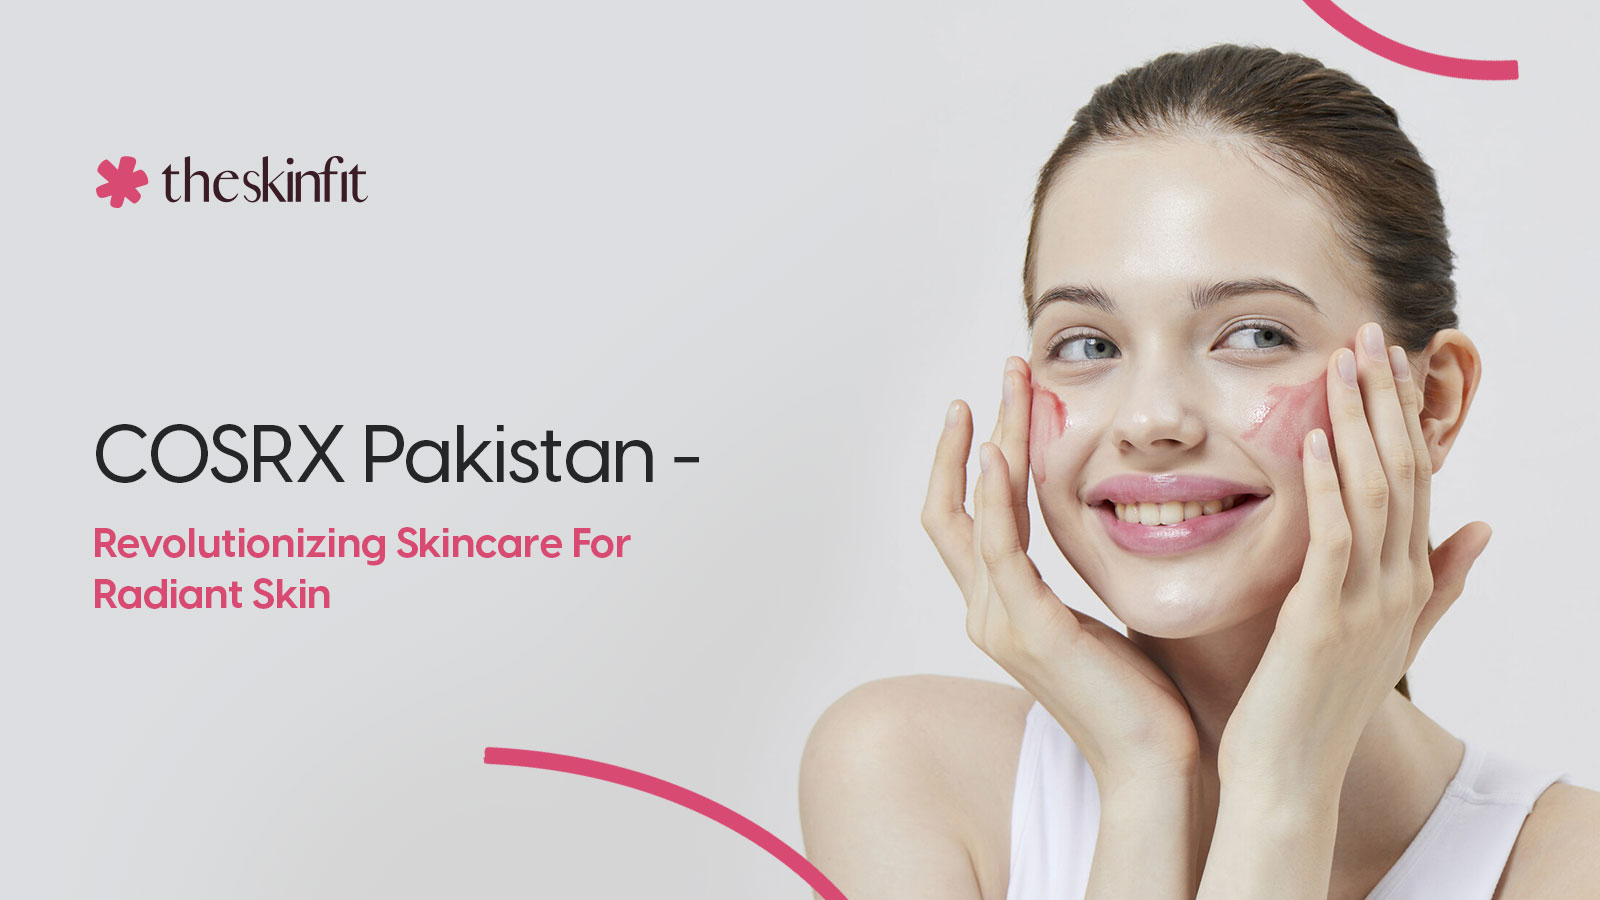 COSRX Pakistan - Revolutionizing Skincare For Radiant Skin